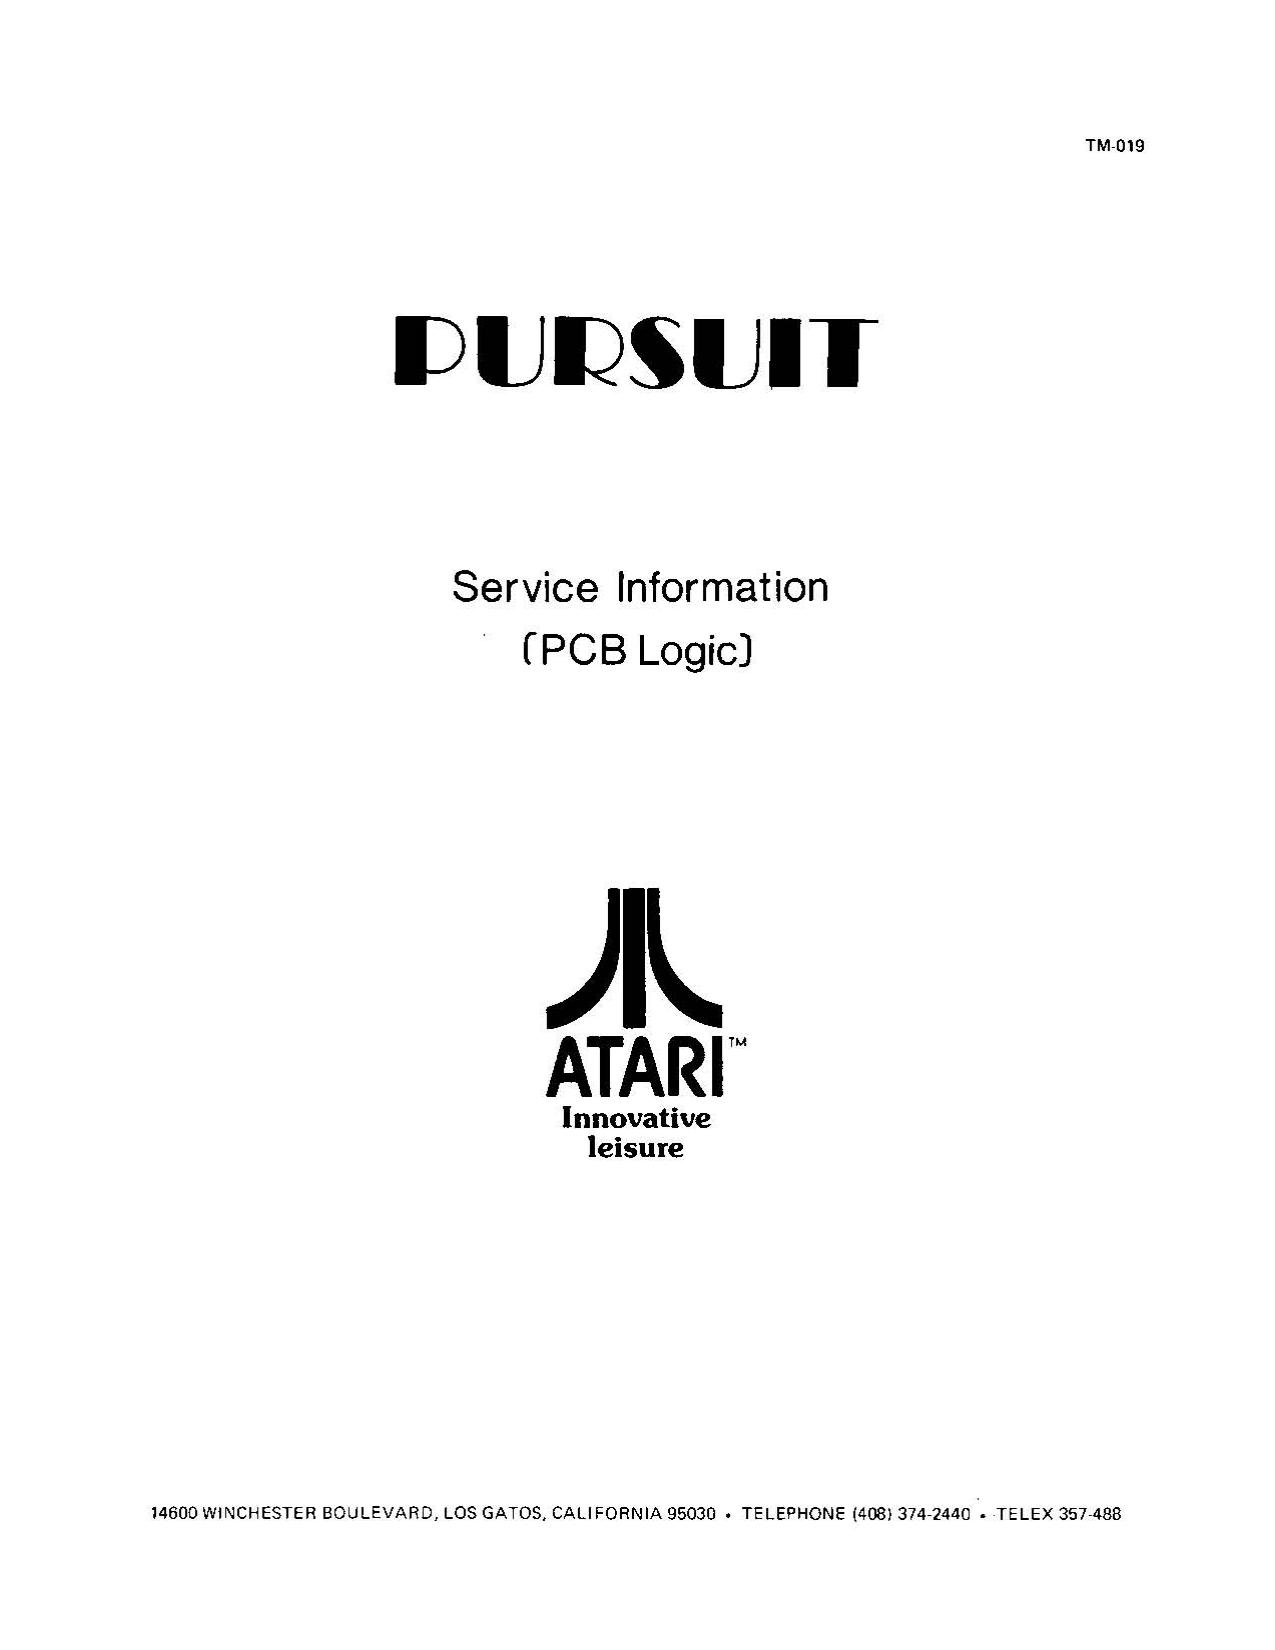 Pursuit (TM-019) (Service Information) (U)